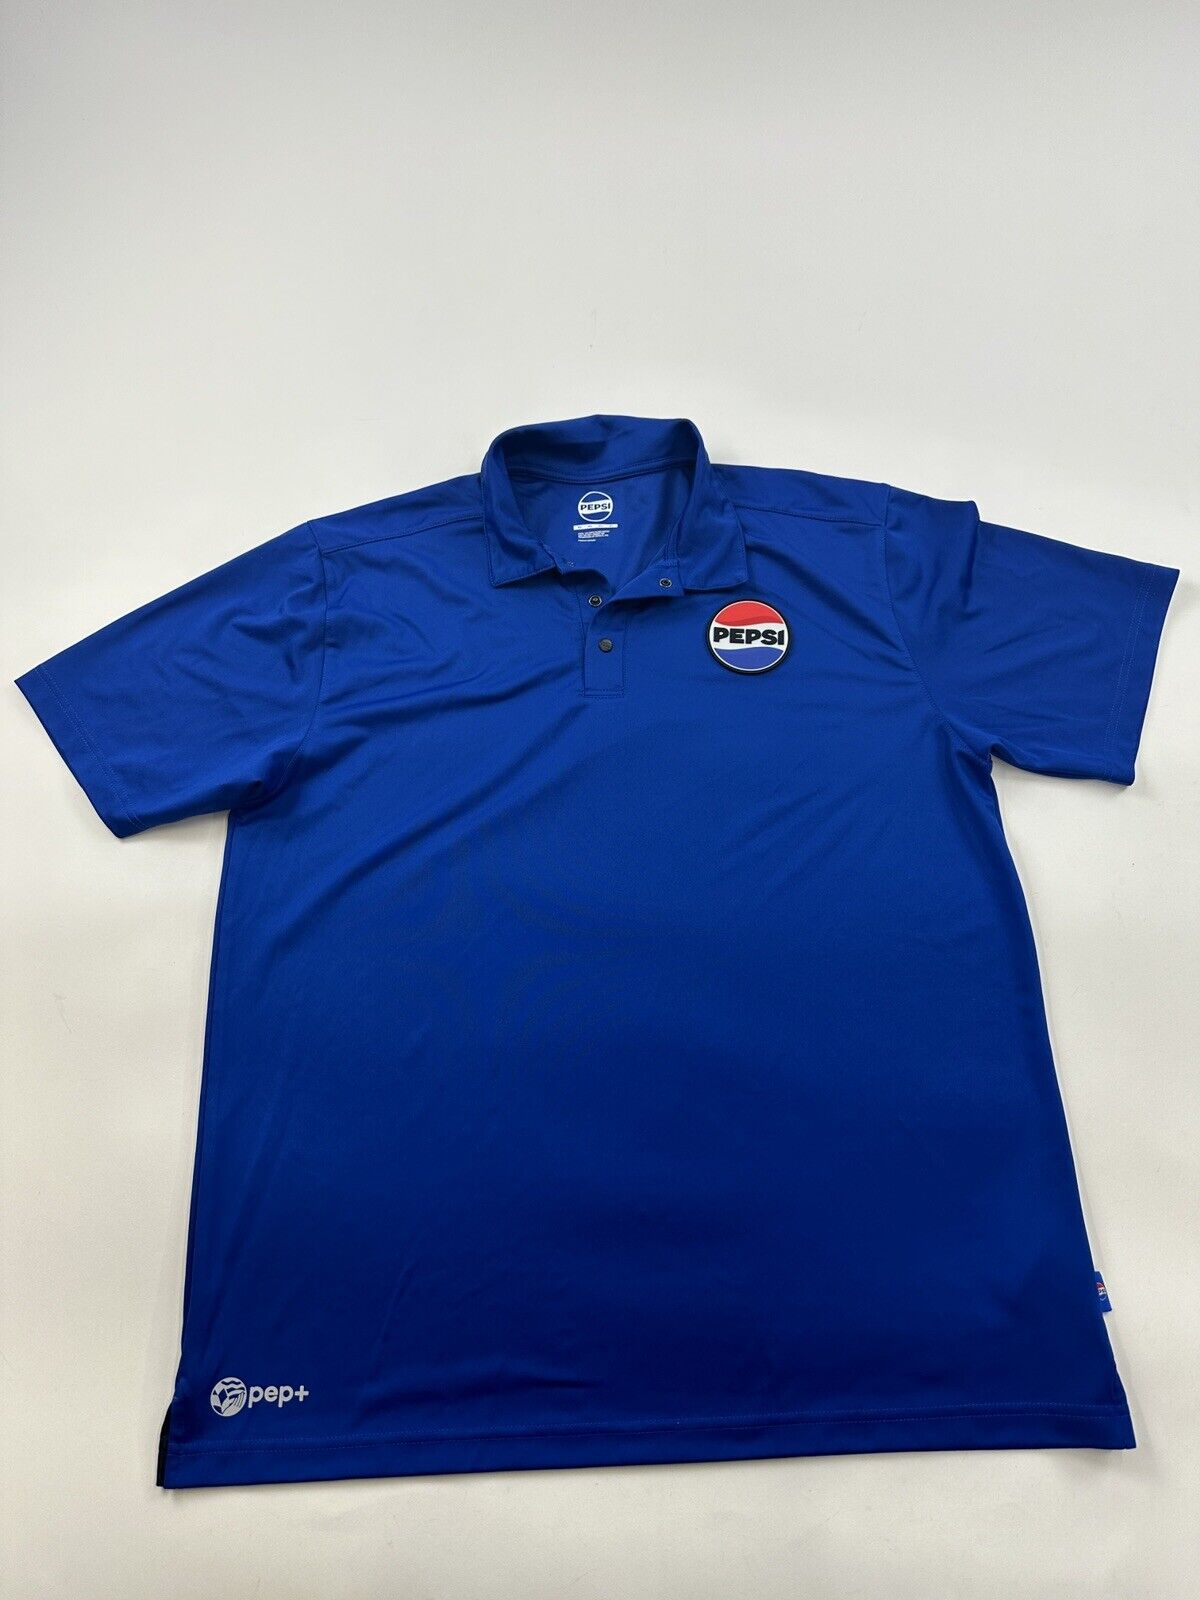 Pepsi Shirt Mens XL Blue Employee Work Polo Sort Sleeve Uniform Pep+